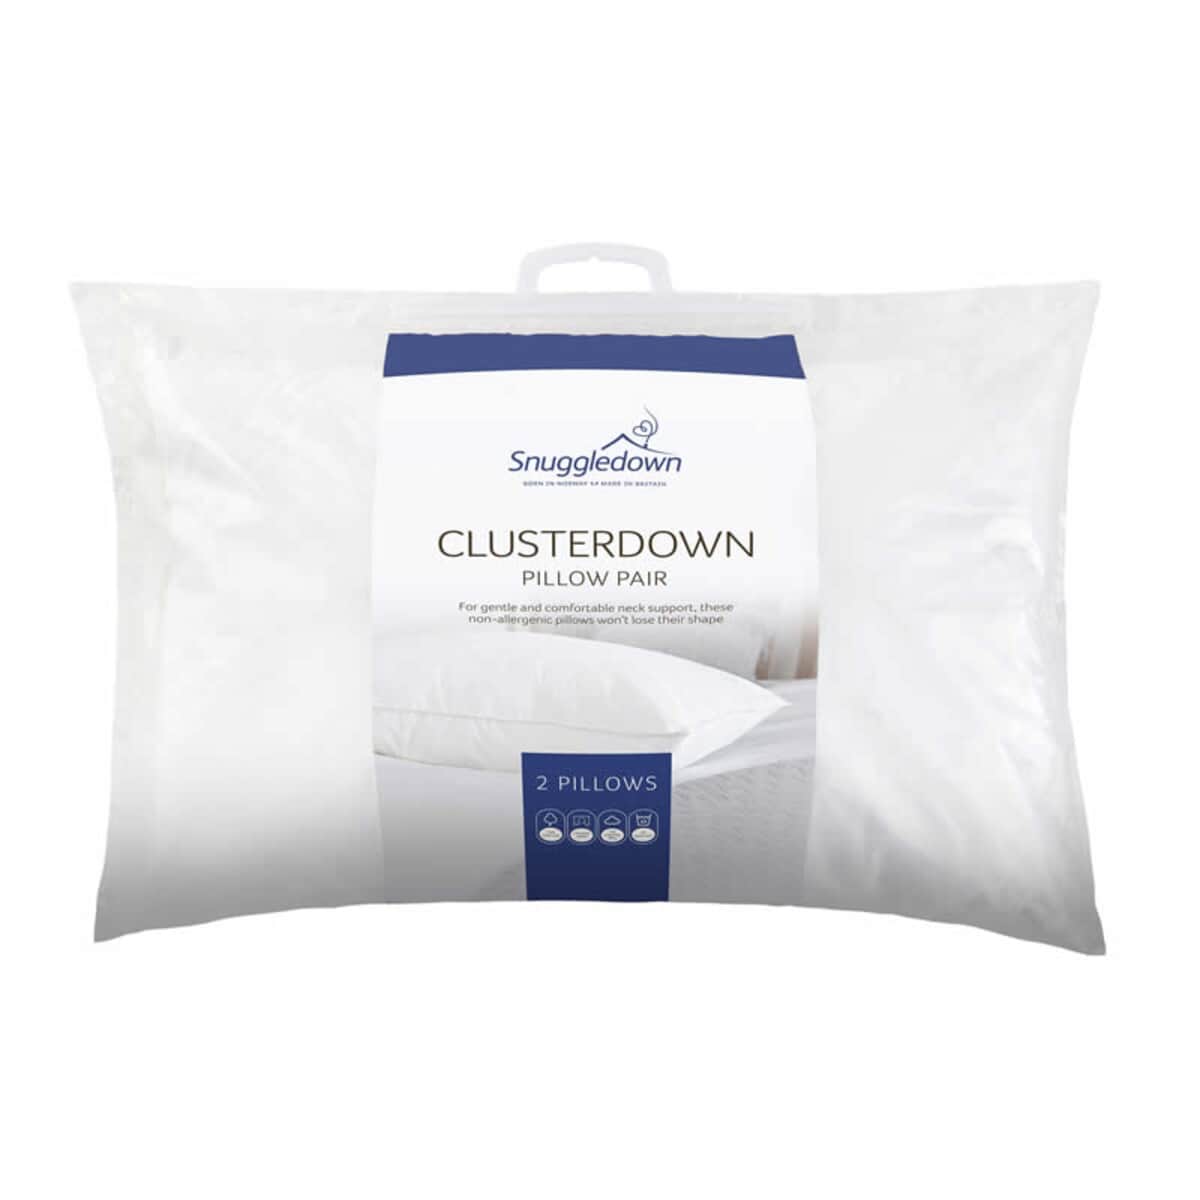 Snuggledown Clusterdown large